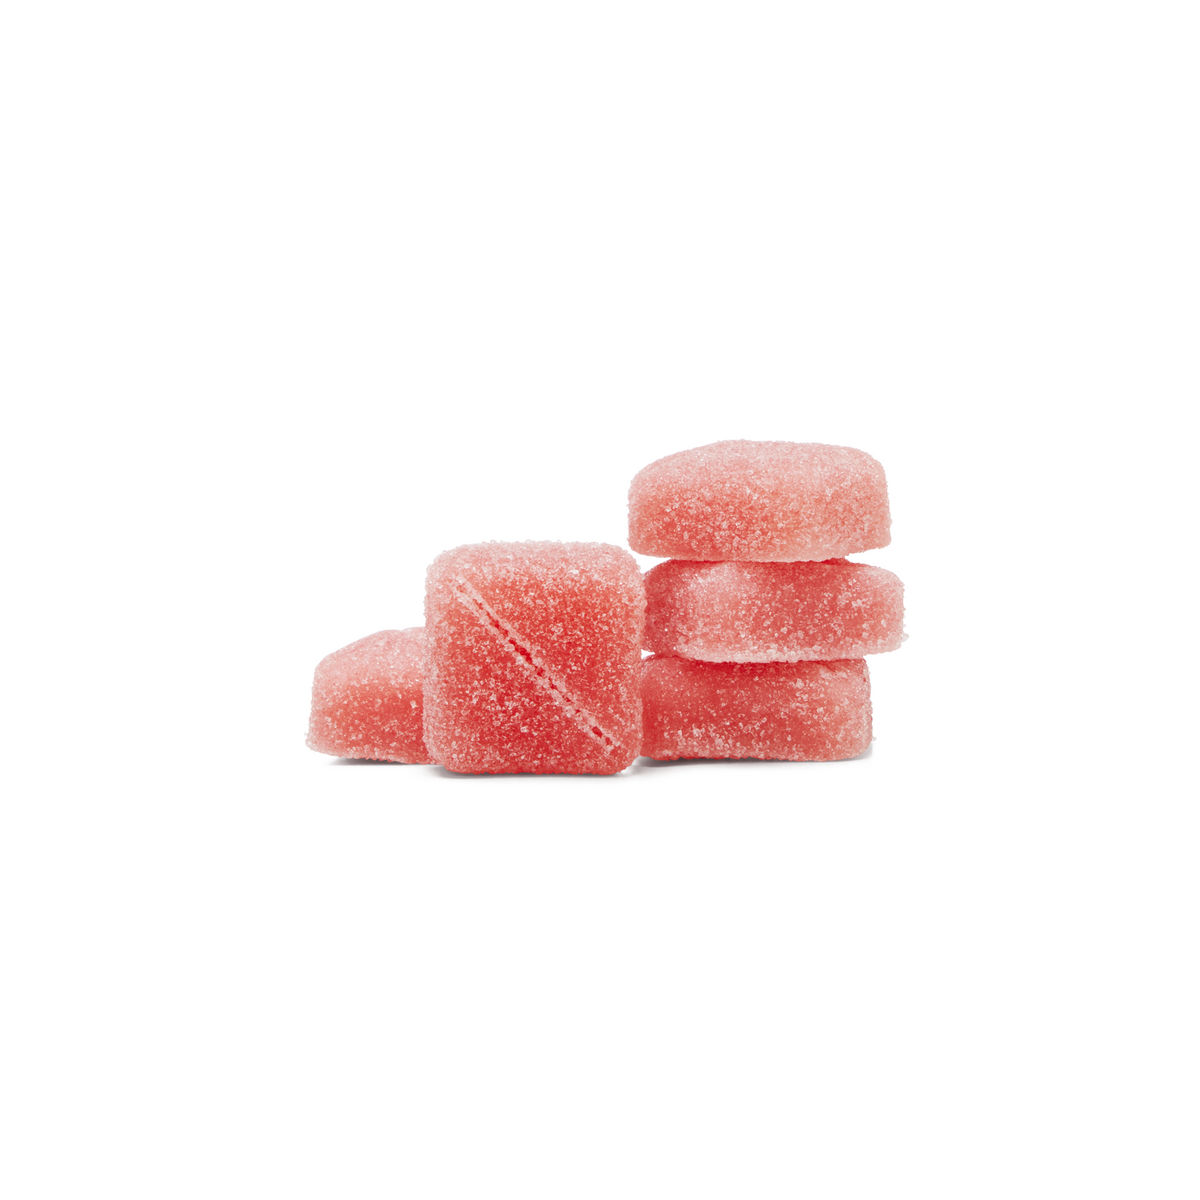 Sour Watermelon | Hybrid - Fast-Acting Gummies - 100mg THC